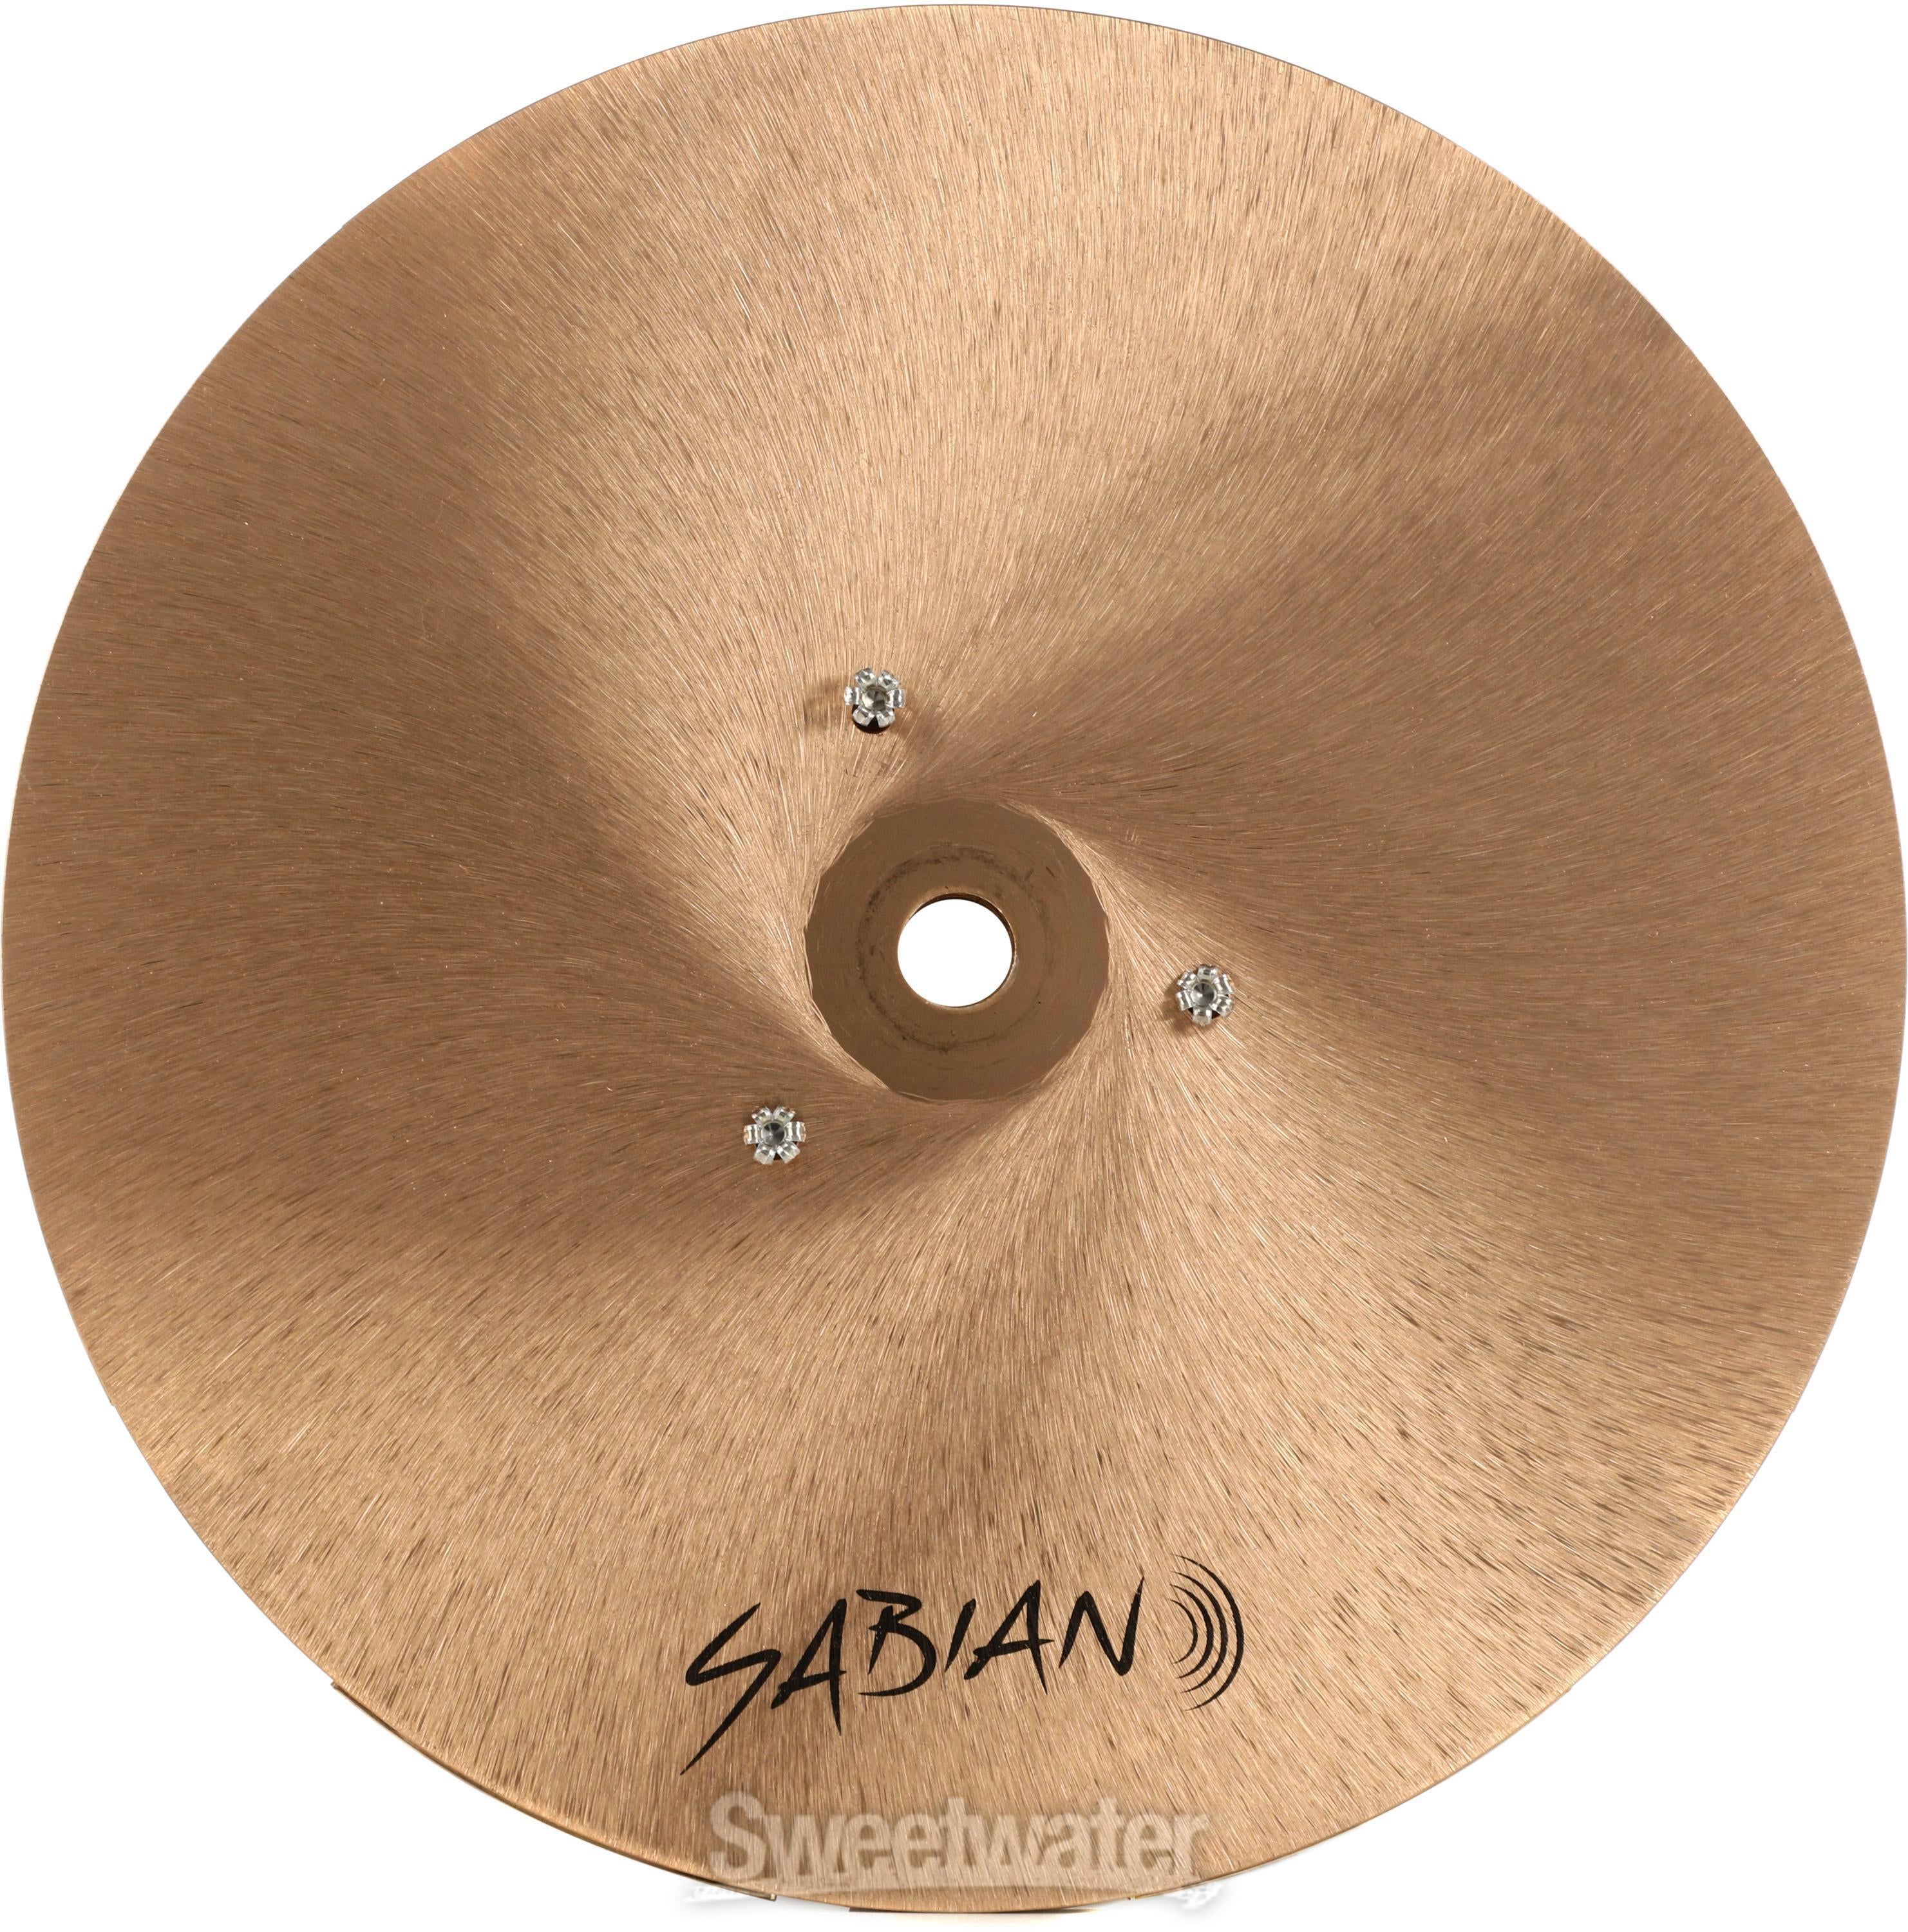 Sabian 8 inch Chopper Cymbal | Sweetwater